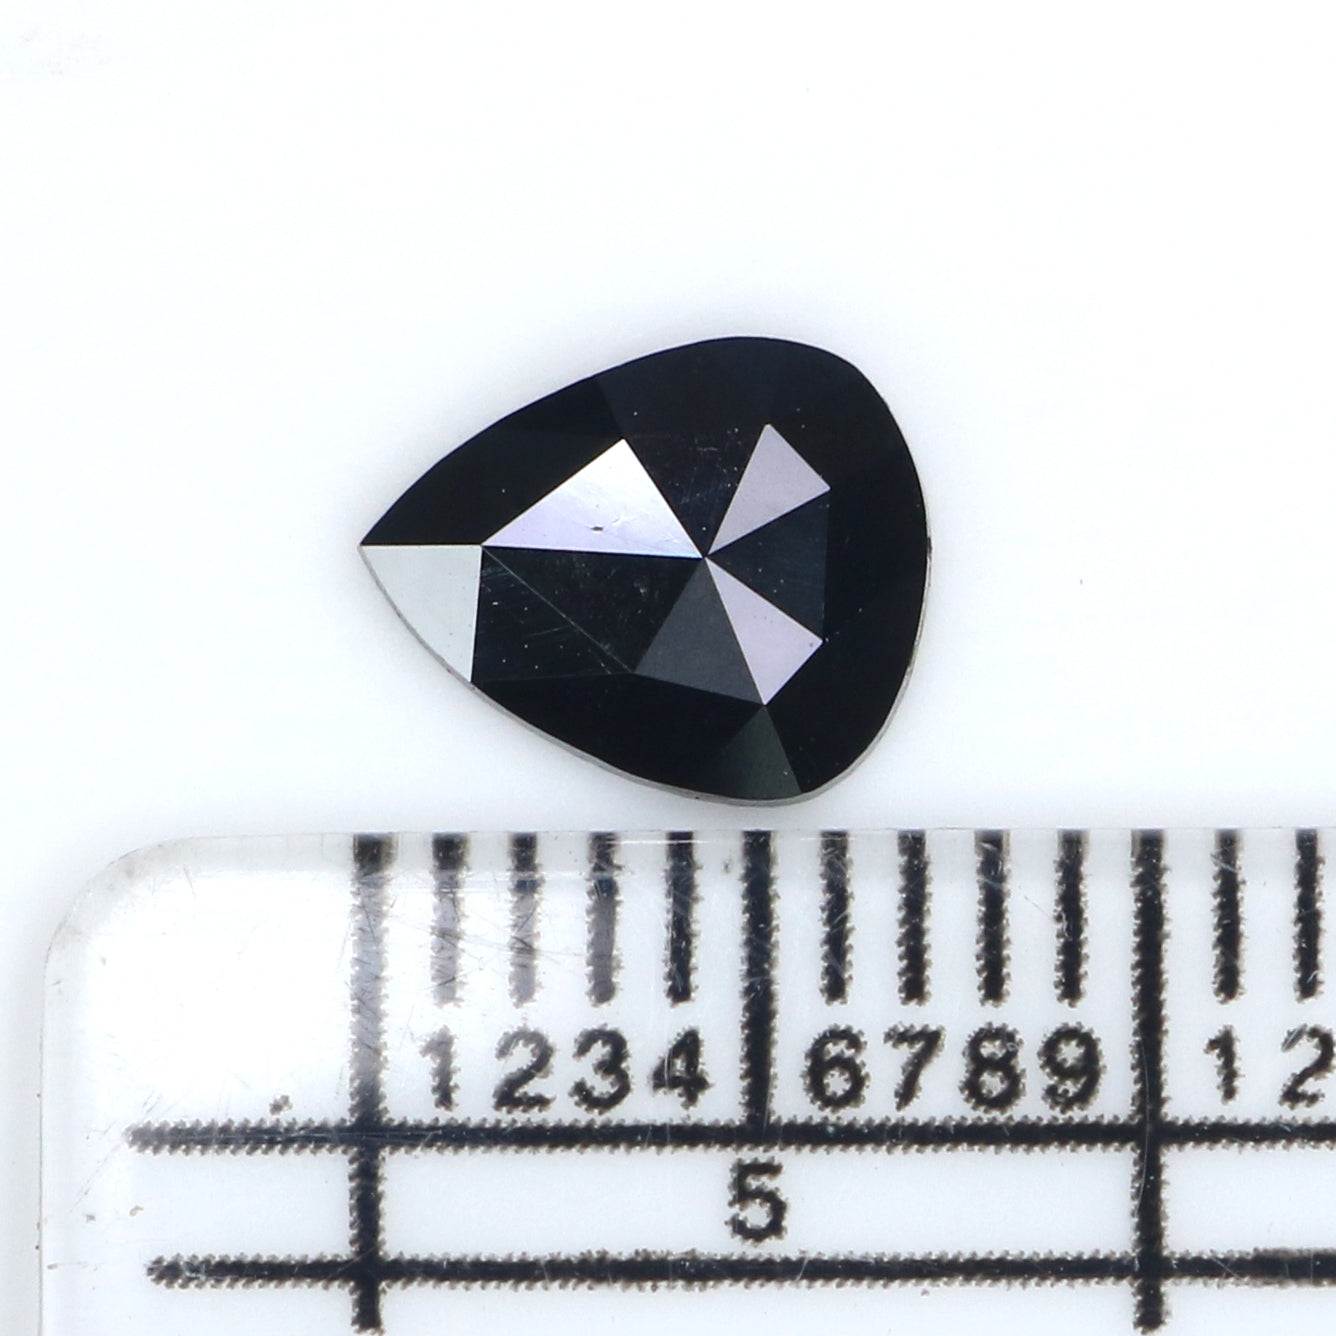 Natural Loose Pear Diamond Black Color 0.69 CT 7.41 MM Pear Shape Rose Cut Diamond L2632